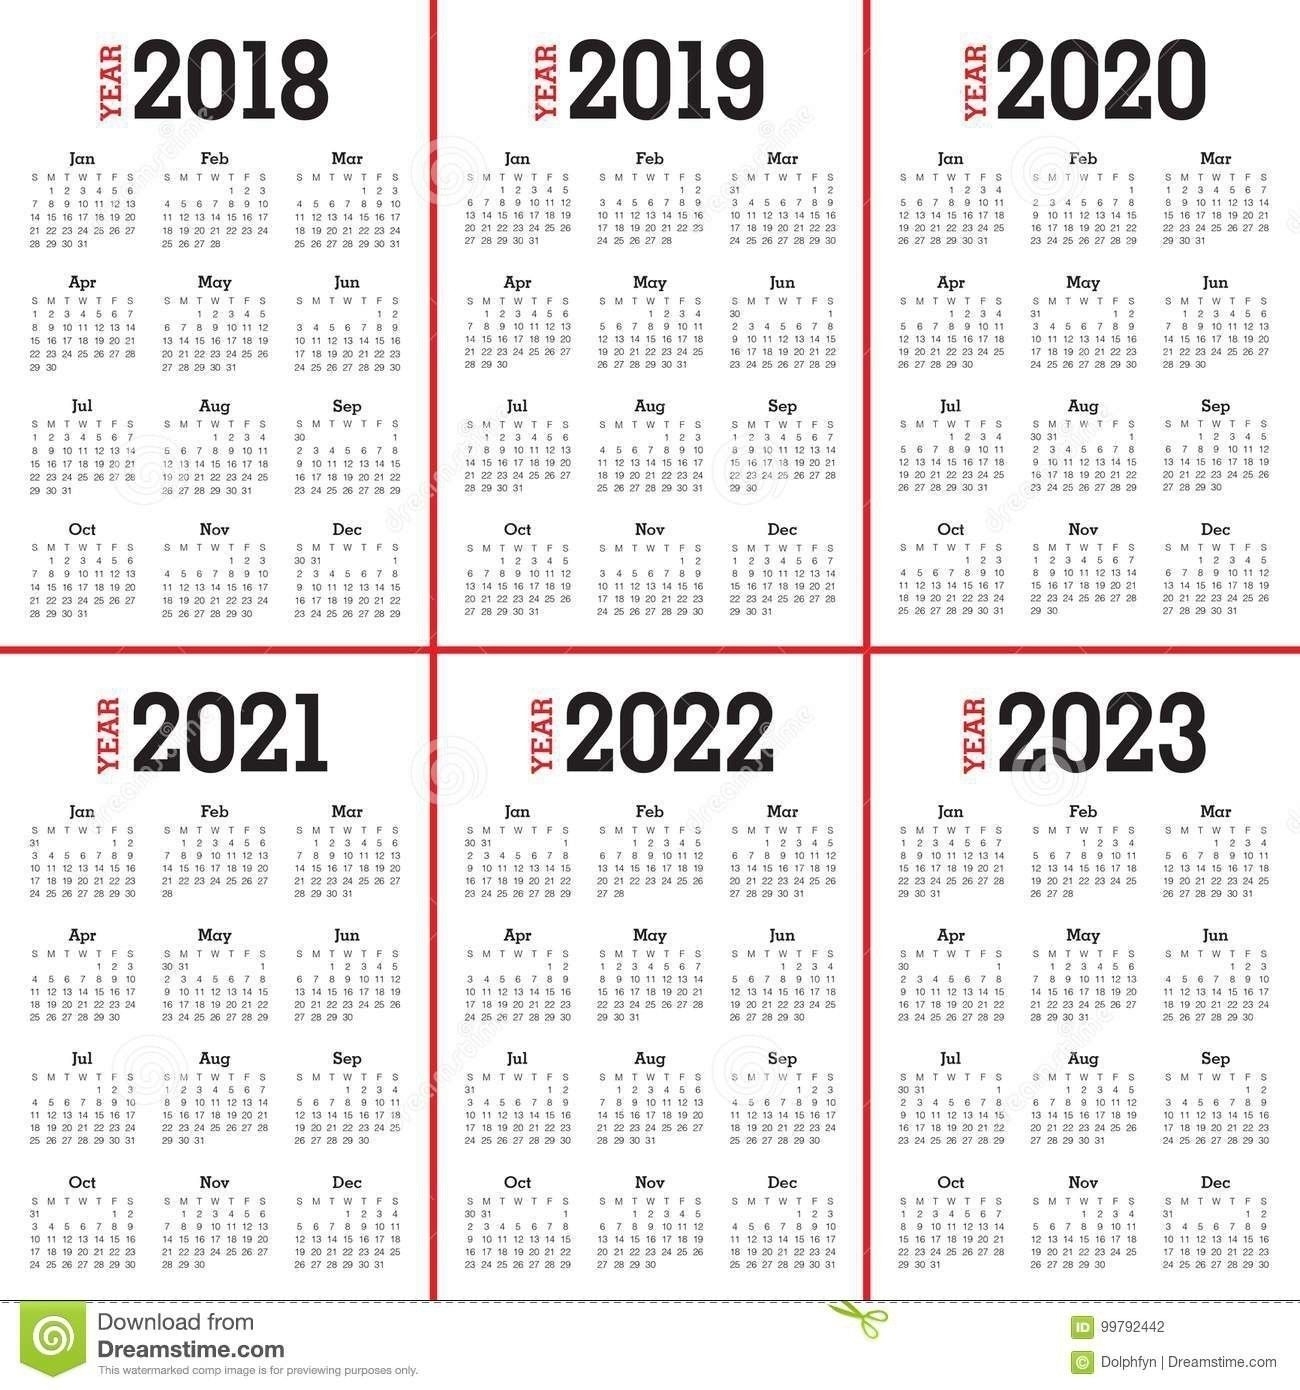 3 Year Calendar 2021 To 2023 In 2020 | Calendar Printables